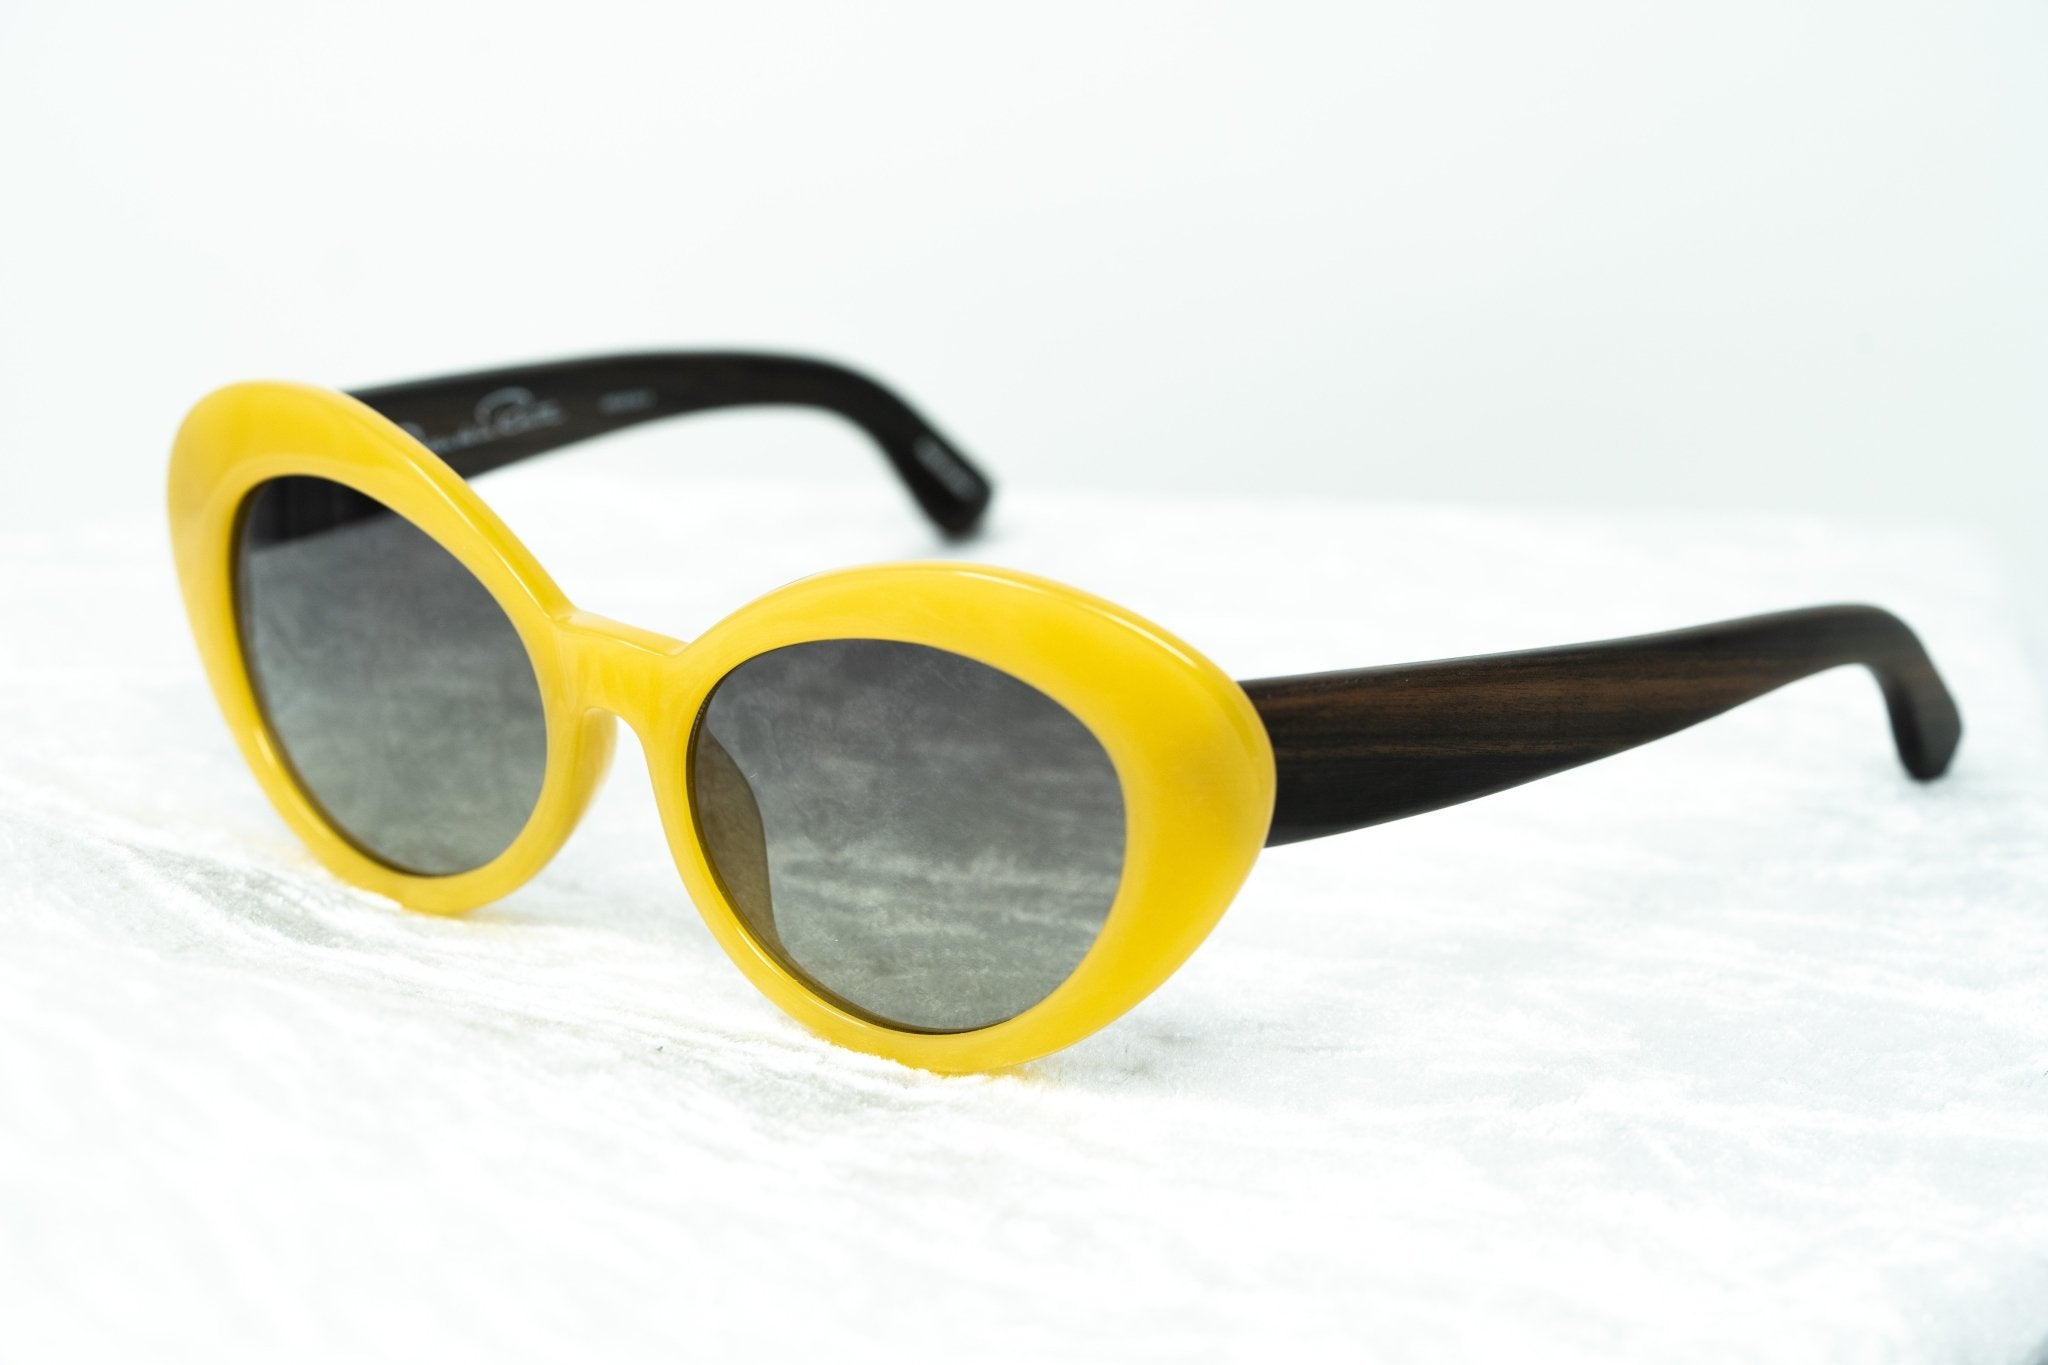 Oscar De La Renta Women Sunglasses Sandalwood Oval Yellow and Grey Lenses - ODLR26C4SUN - Watches & Crystals